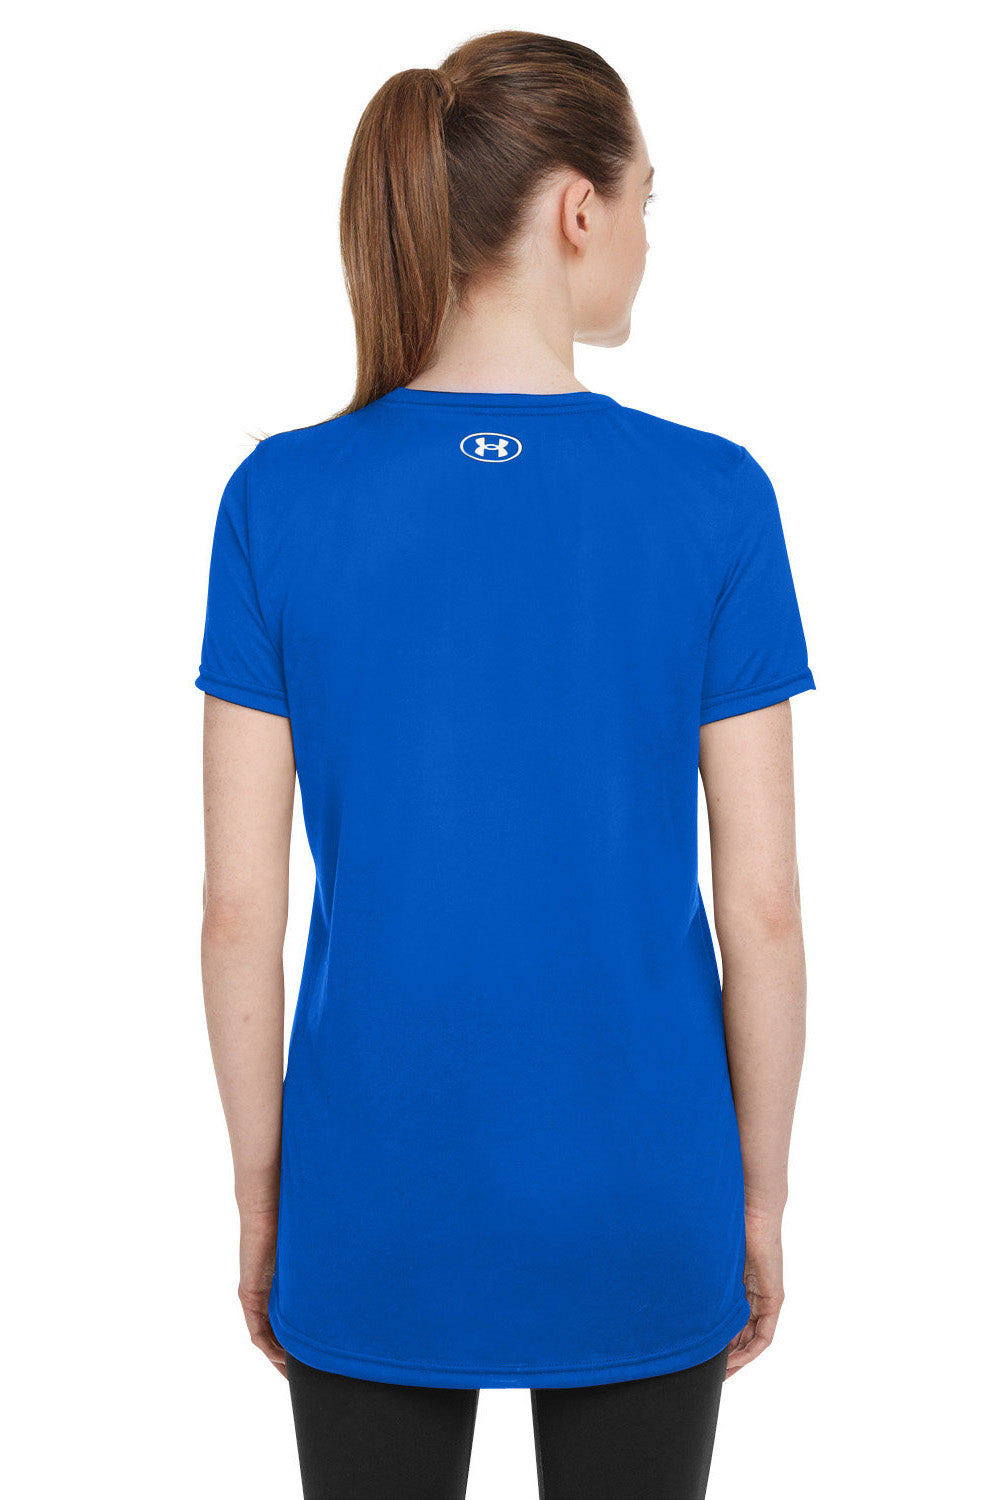 Under Armour 1376847 Womens Team Tech Moisture Wicking Short Sleeve Crewneck T-Shirt Royal Blue Model Back